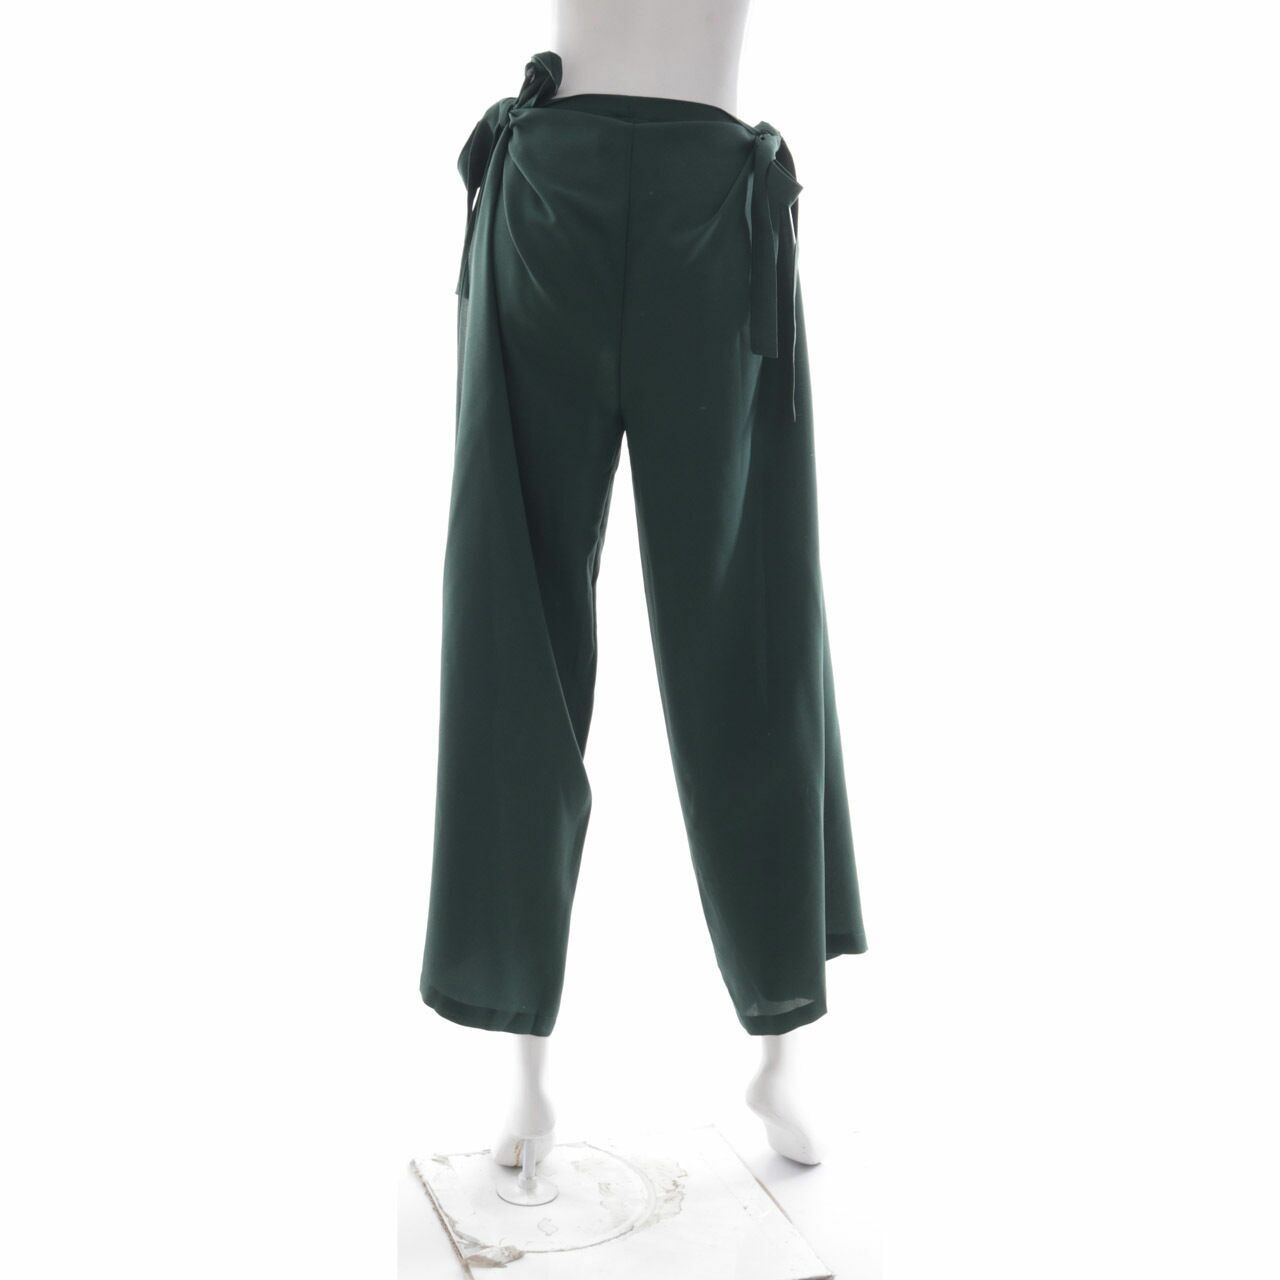 Adzani Dark Green Wrap Long Pants